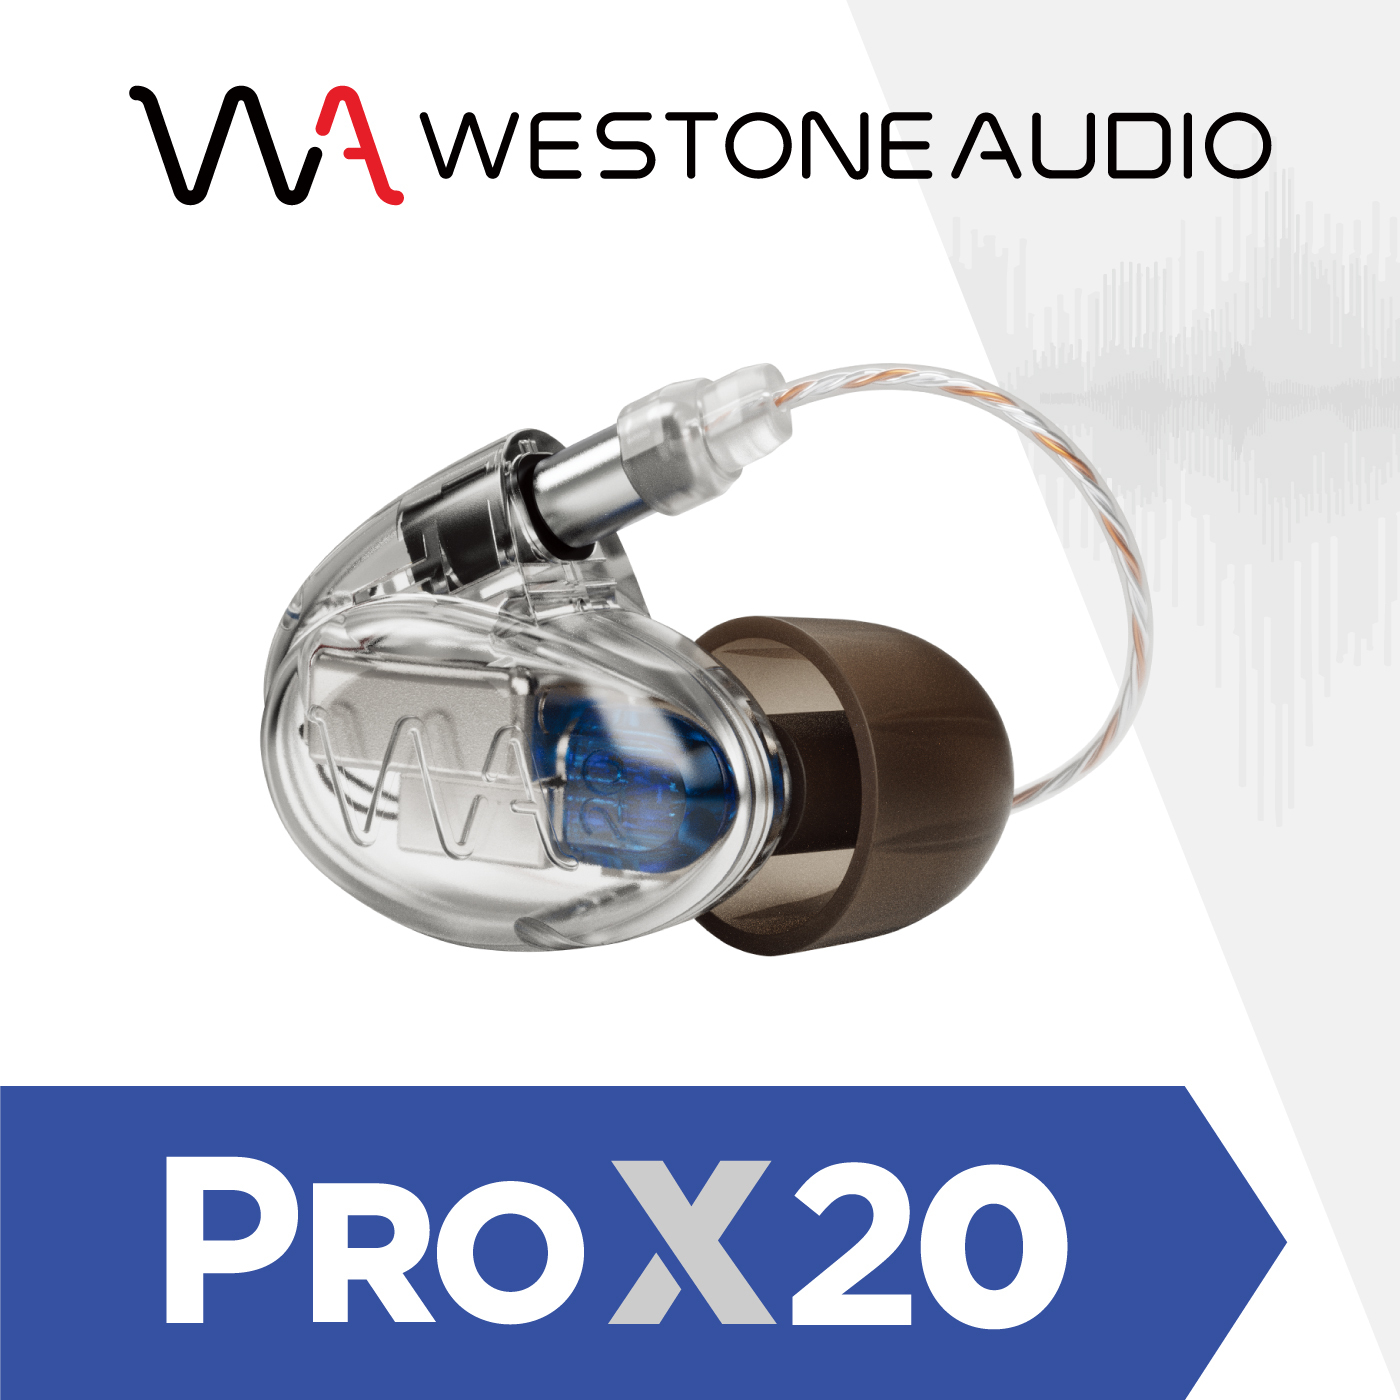 WESTONE AUDIO <br>Pro X20 <br>ウェストンオーディオ バランスド・アーマチュア・ドライバー2基 イヤホン <br>国内正規代理店